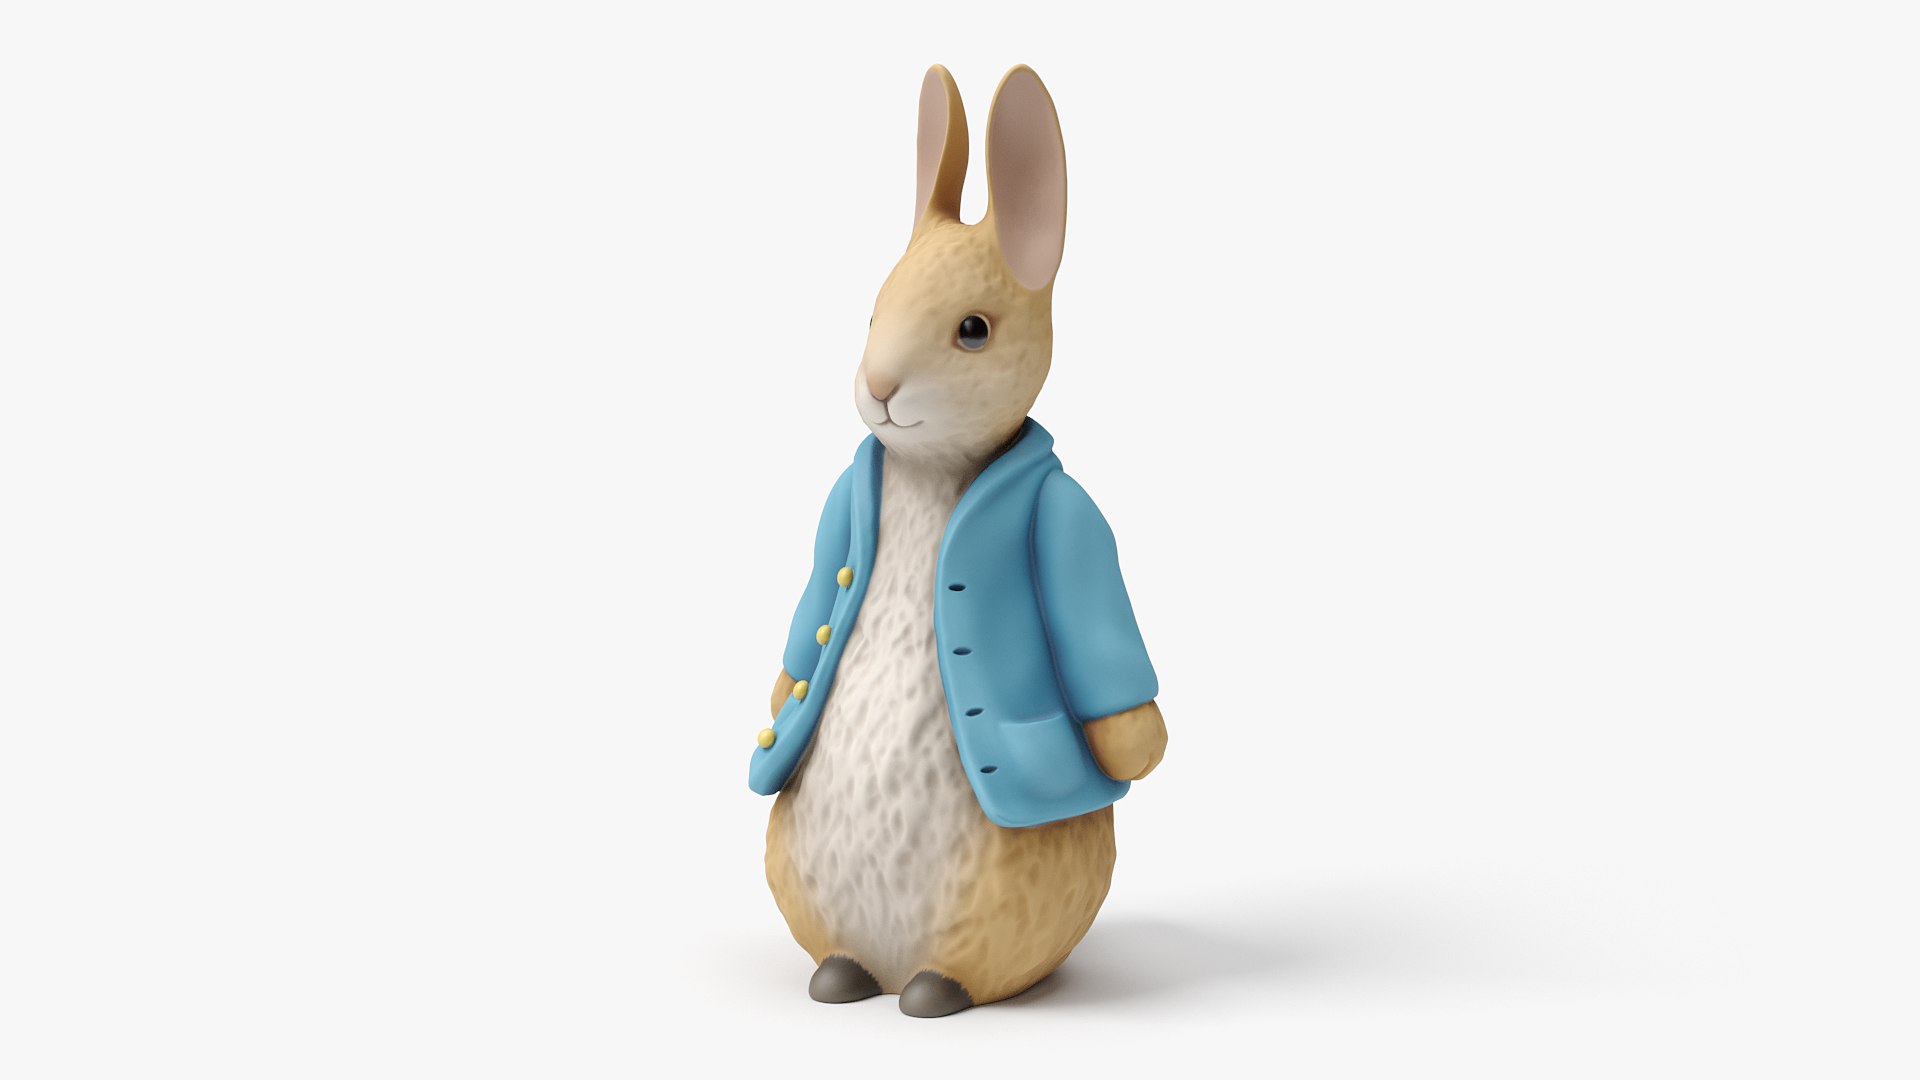 max bunny figurine https://p.turbosquid.com/ts-thumb/Ub/1Qyd9j/e0/01_01/png/1611921969/1920x1080/fit_q87/e89858340a82b23b7b68da6dcfe1350403db97b9/01_01.jpg